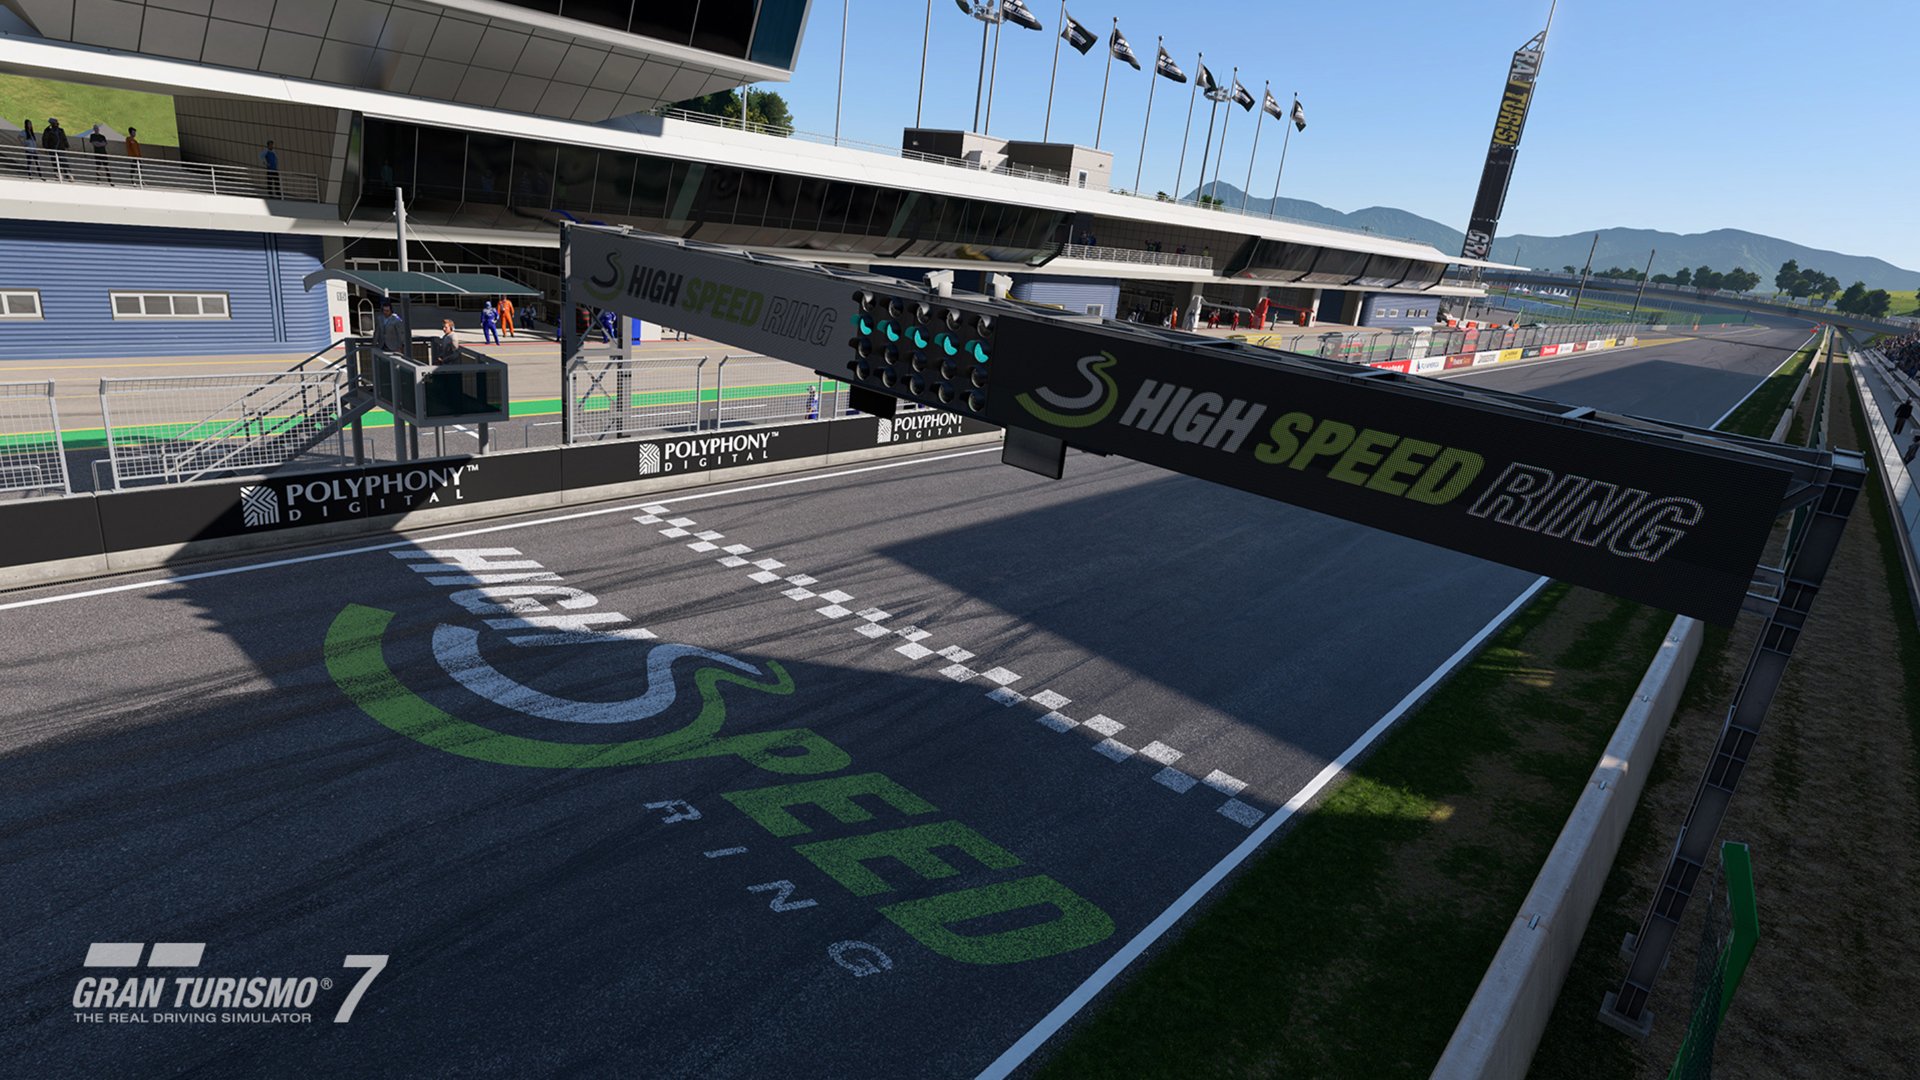 Gran Turismo Sport Rumored Open Beta Details Emerge Online; Looks